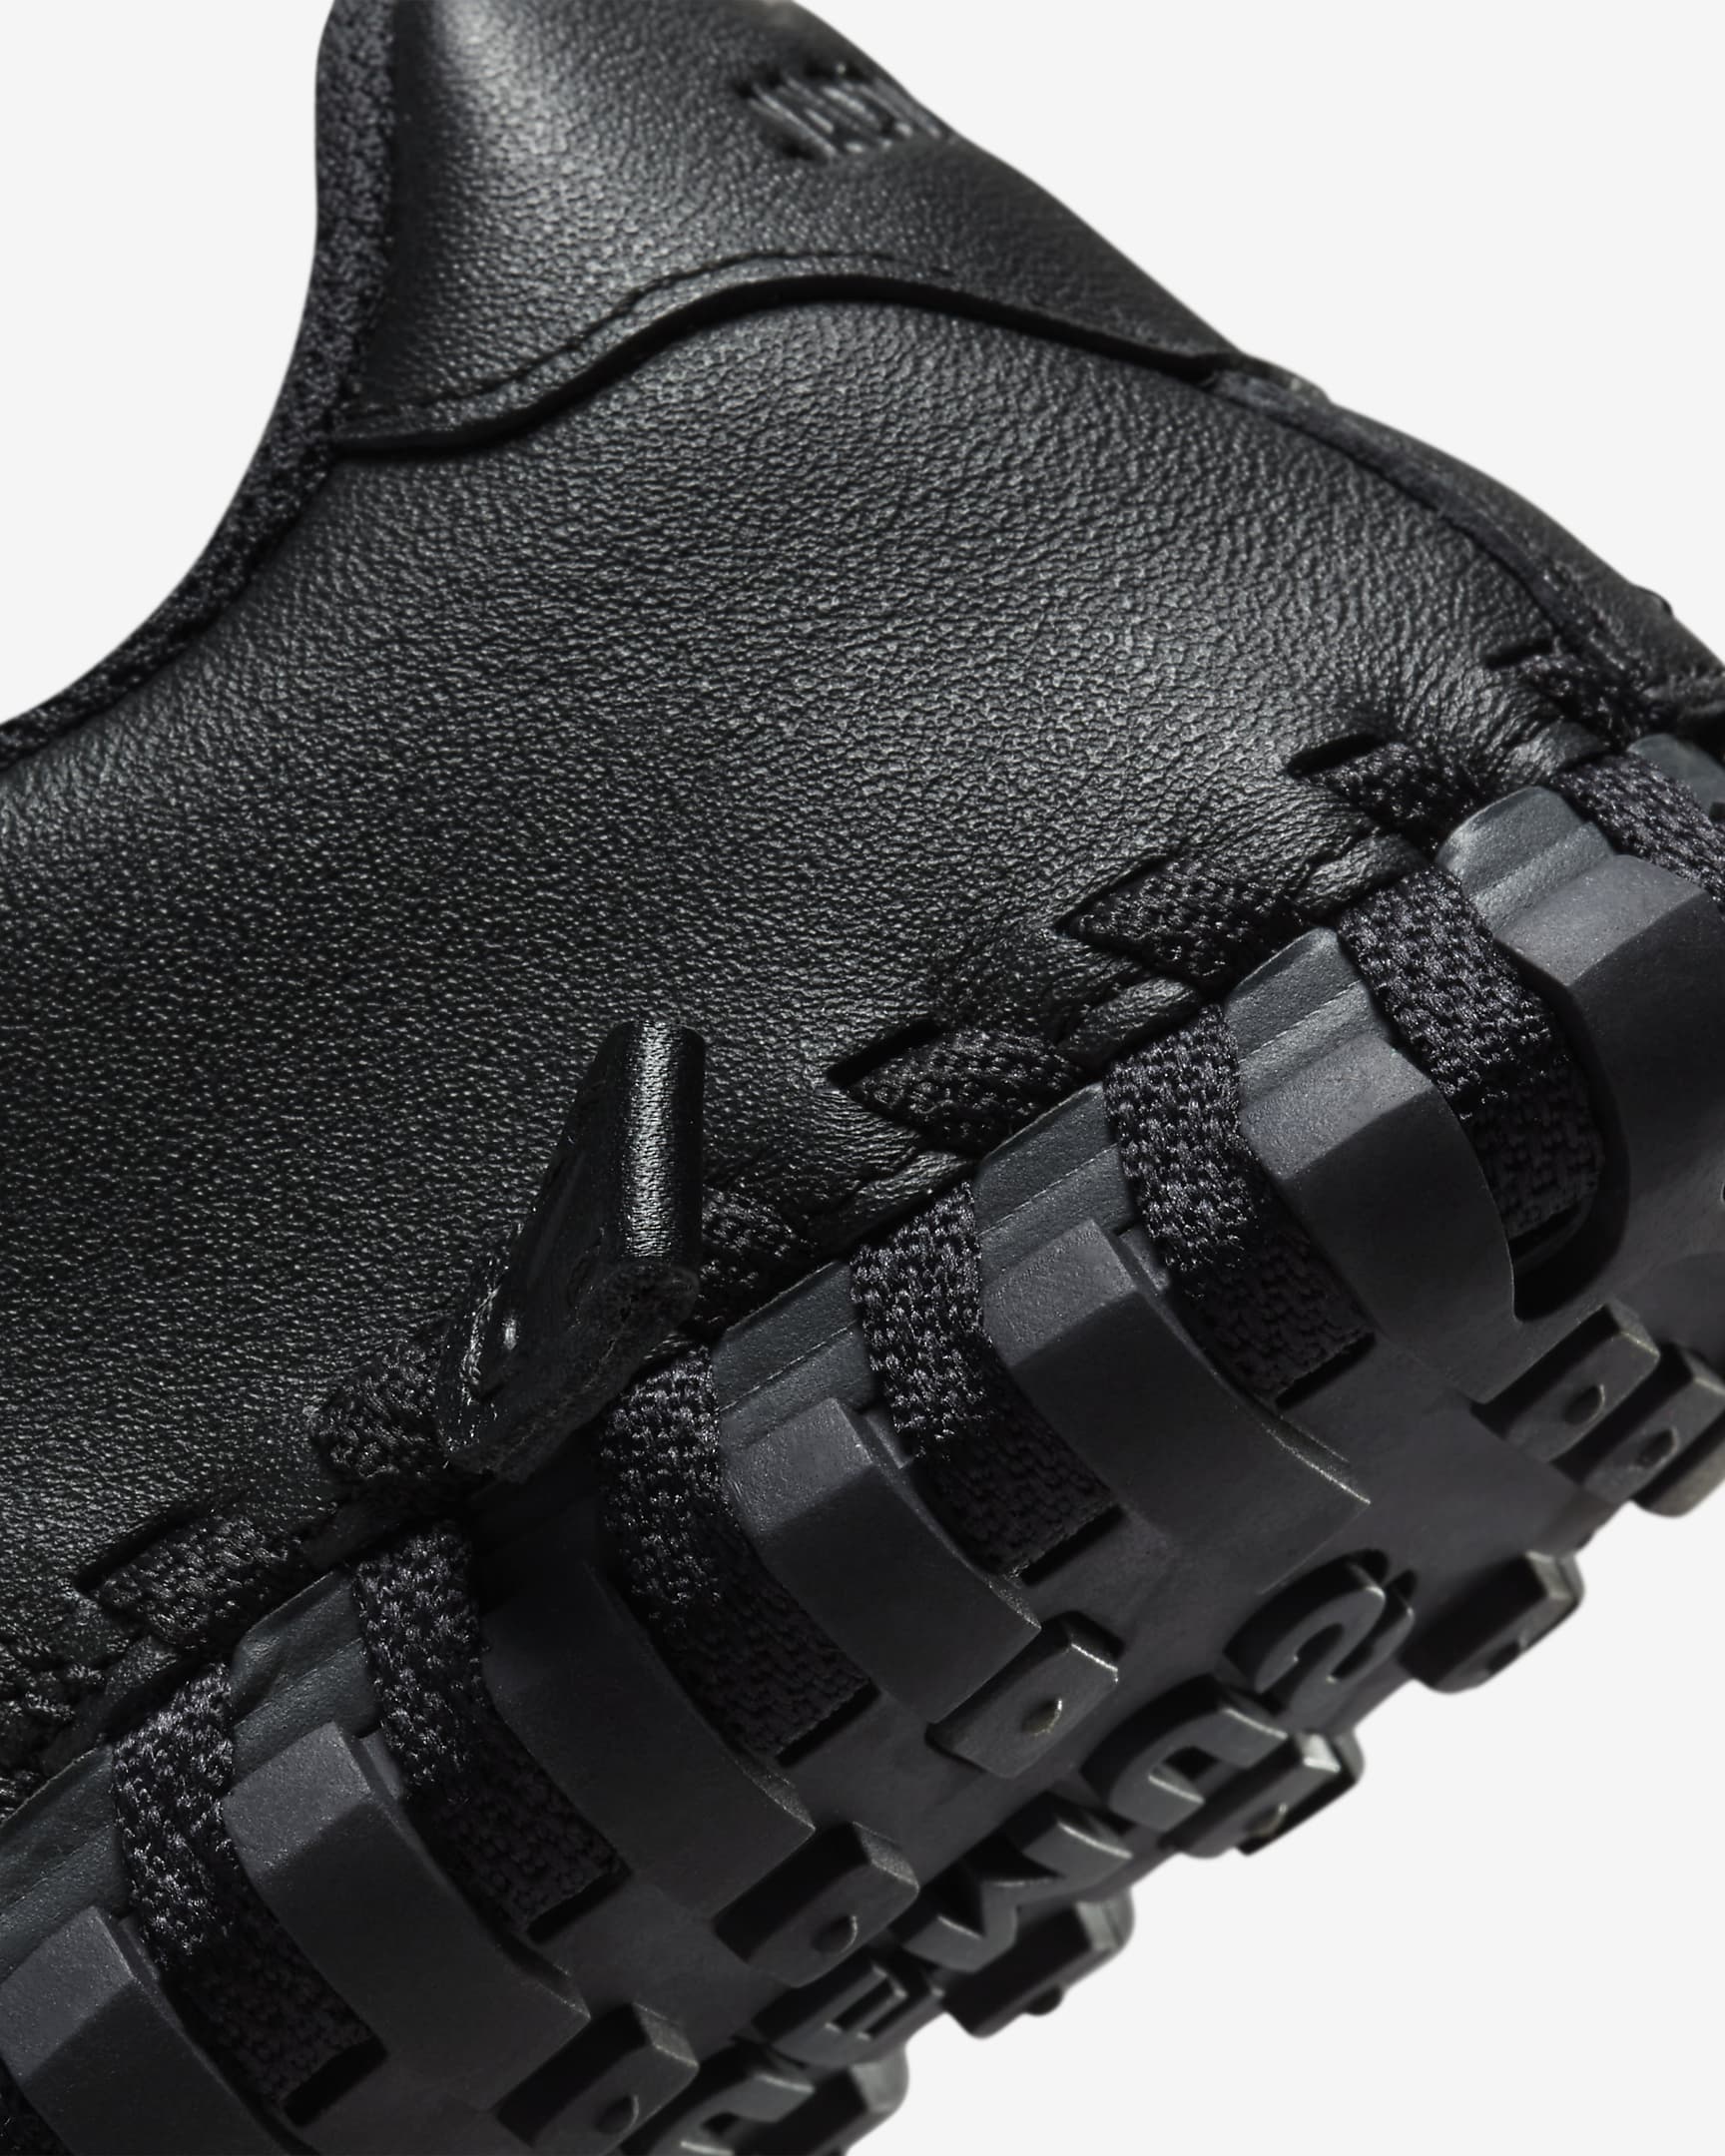 Nike J Force 1 Low LX SP Women's Shoes - Black/Black/Anthracite/Metallic Silver